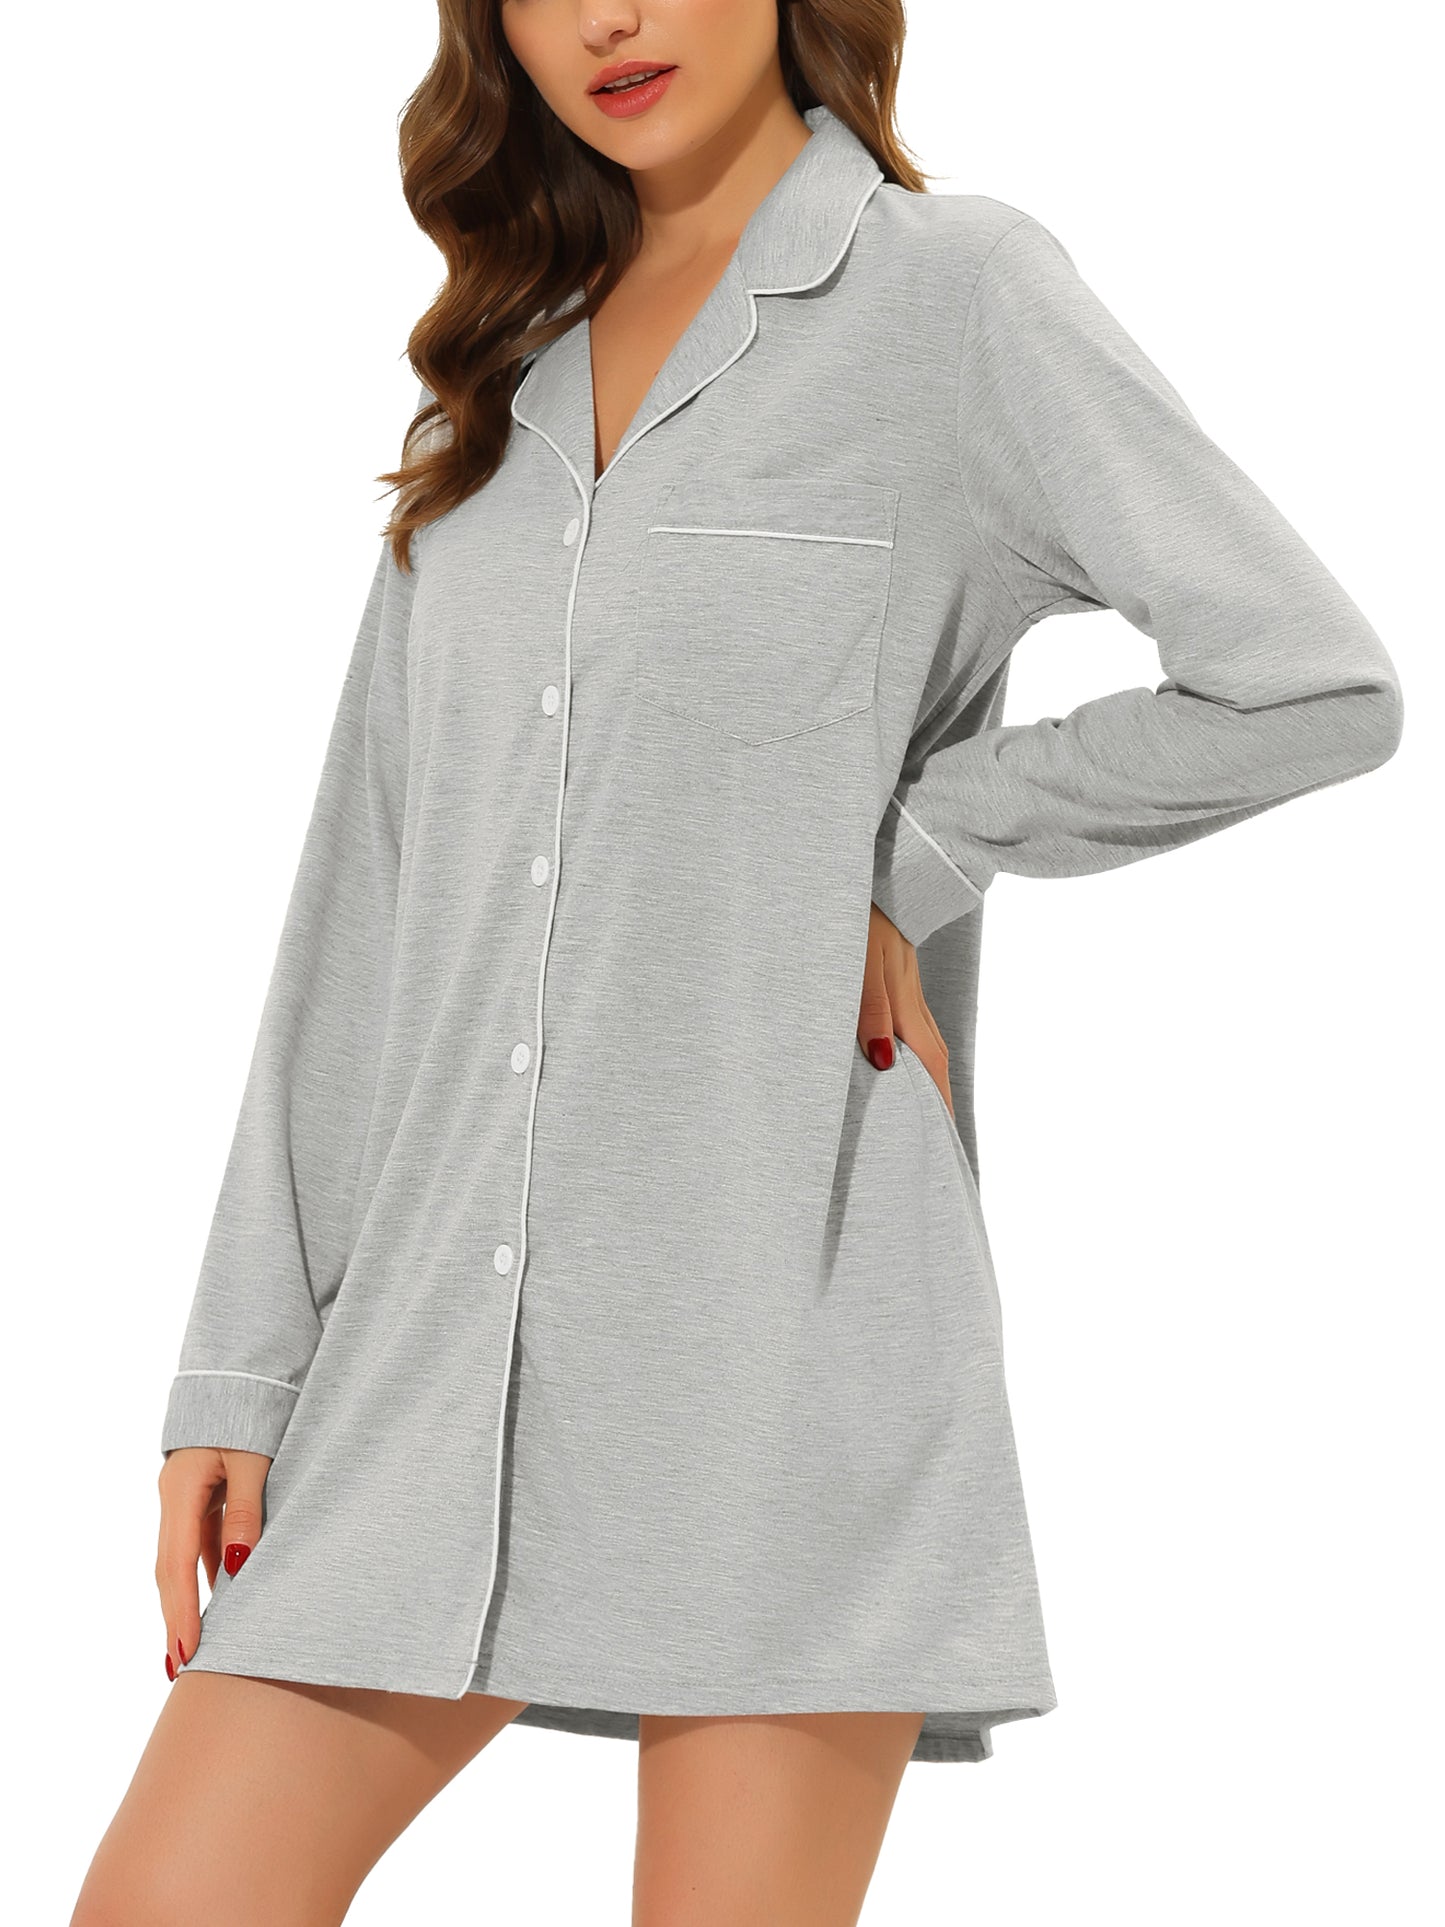 cheibear Pajamas Nightshirt Short Sleeves Button Down Shirt Dress Gray